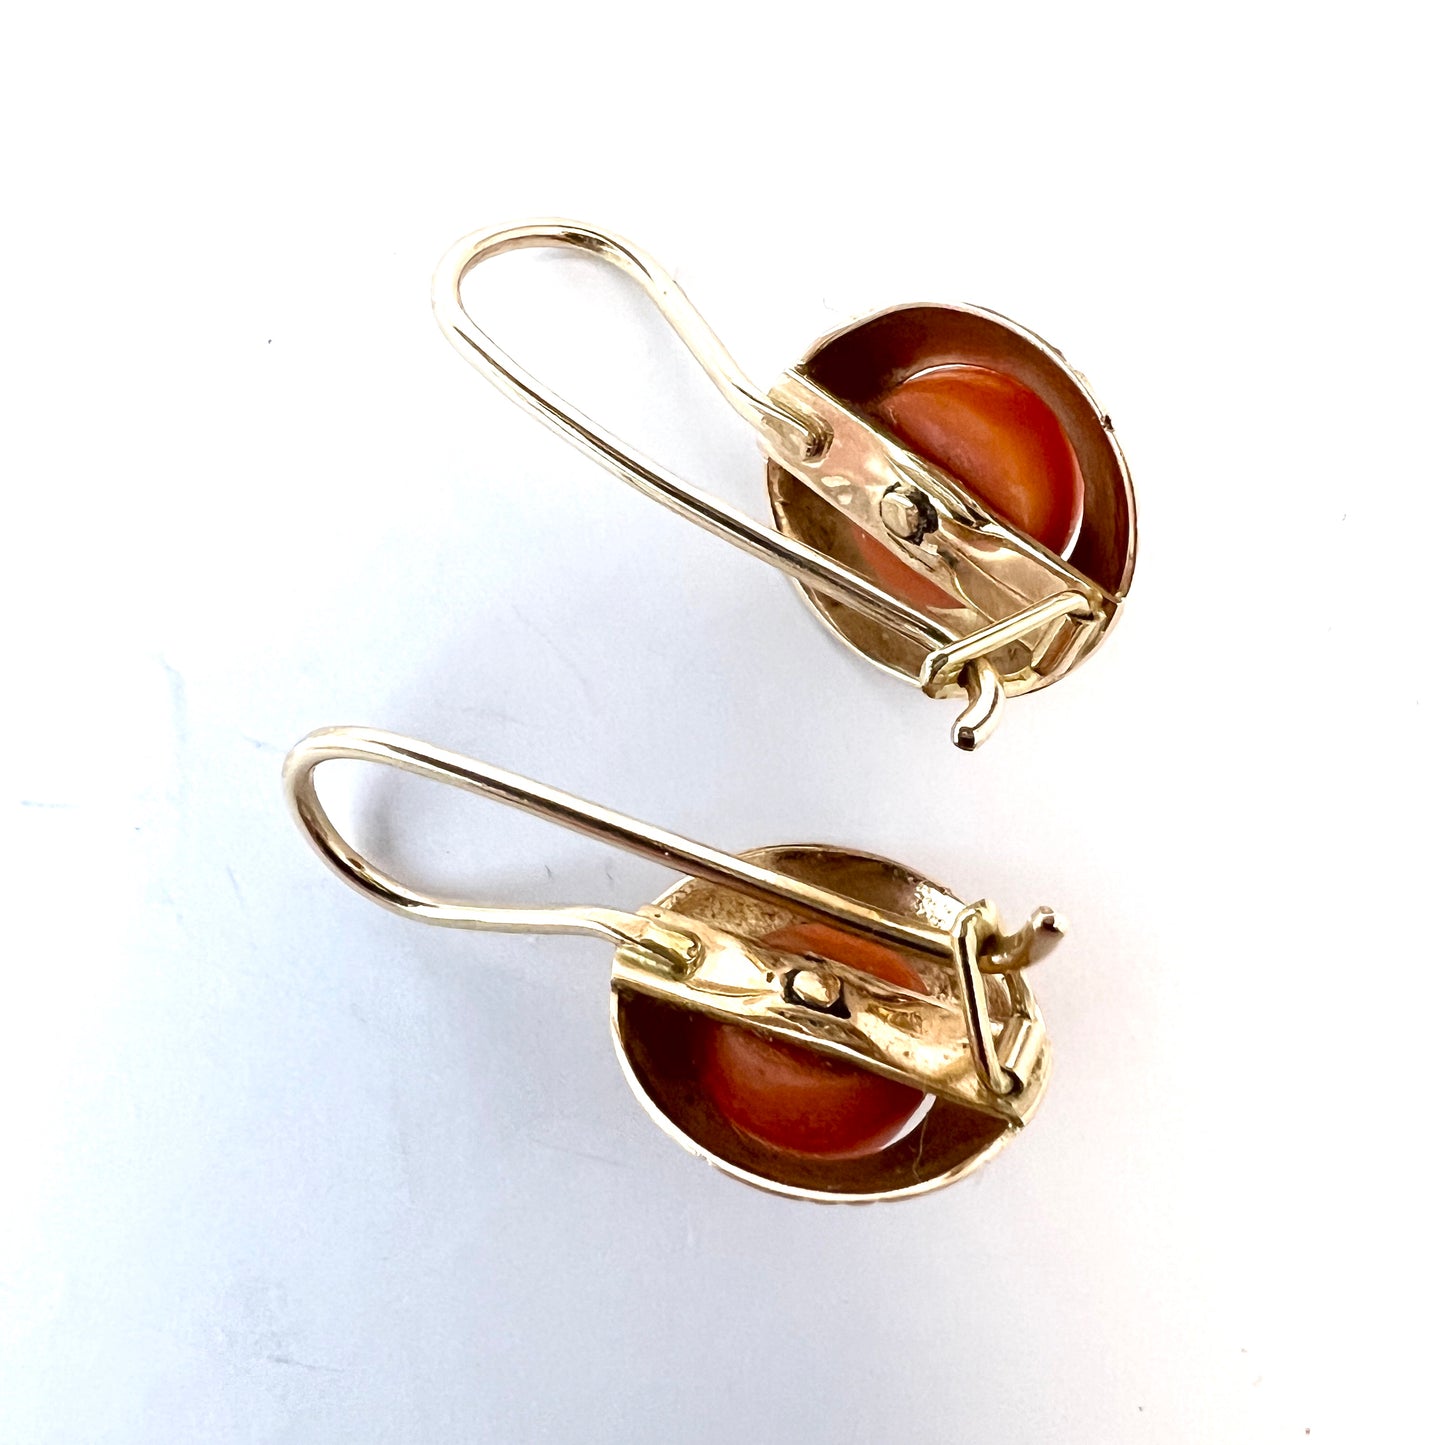 Vintage Mid-century 14k Gold Coral Earrings.